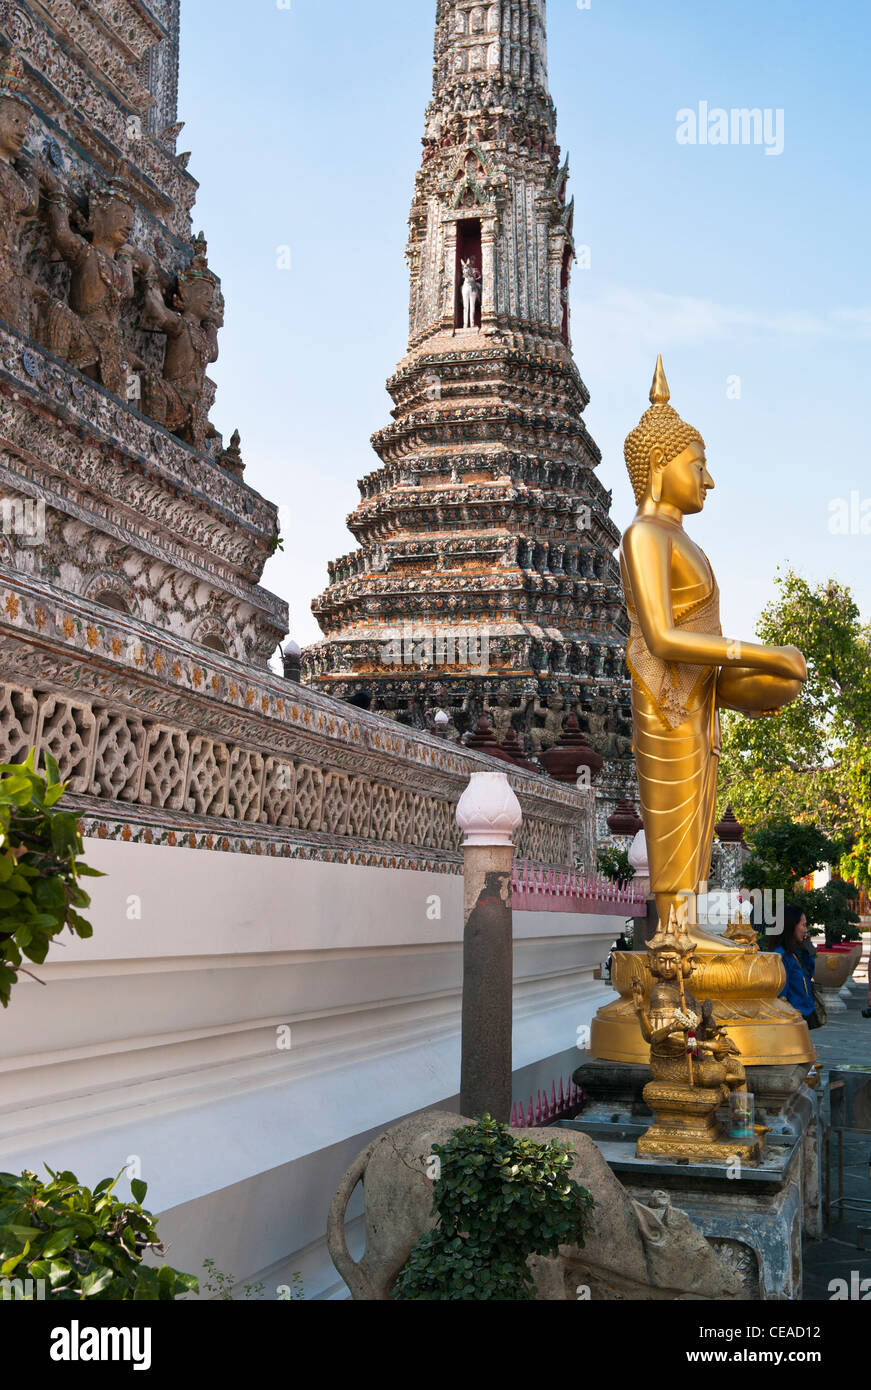 Wat Arun Temple or Temple of the Dawn, Bangkok, Thailand. Stock Photo